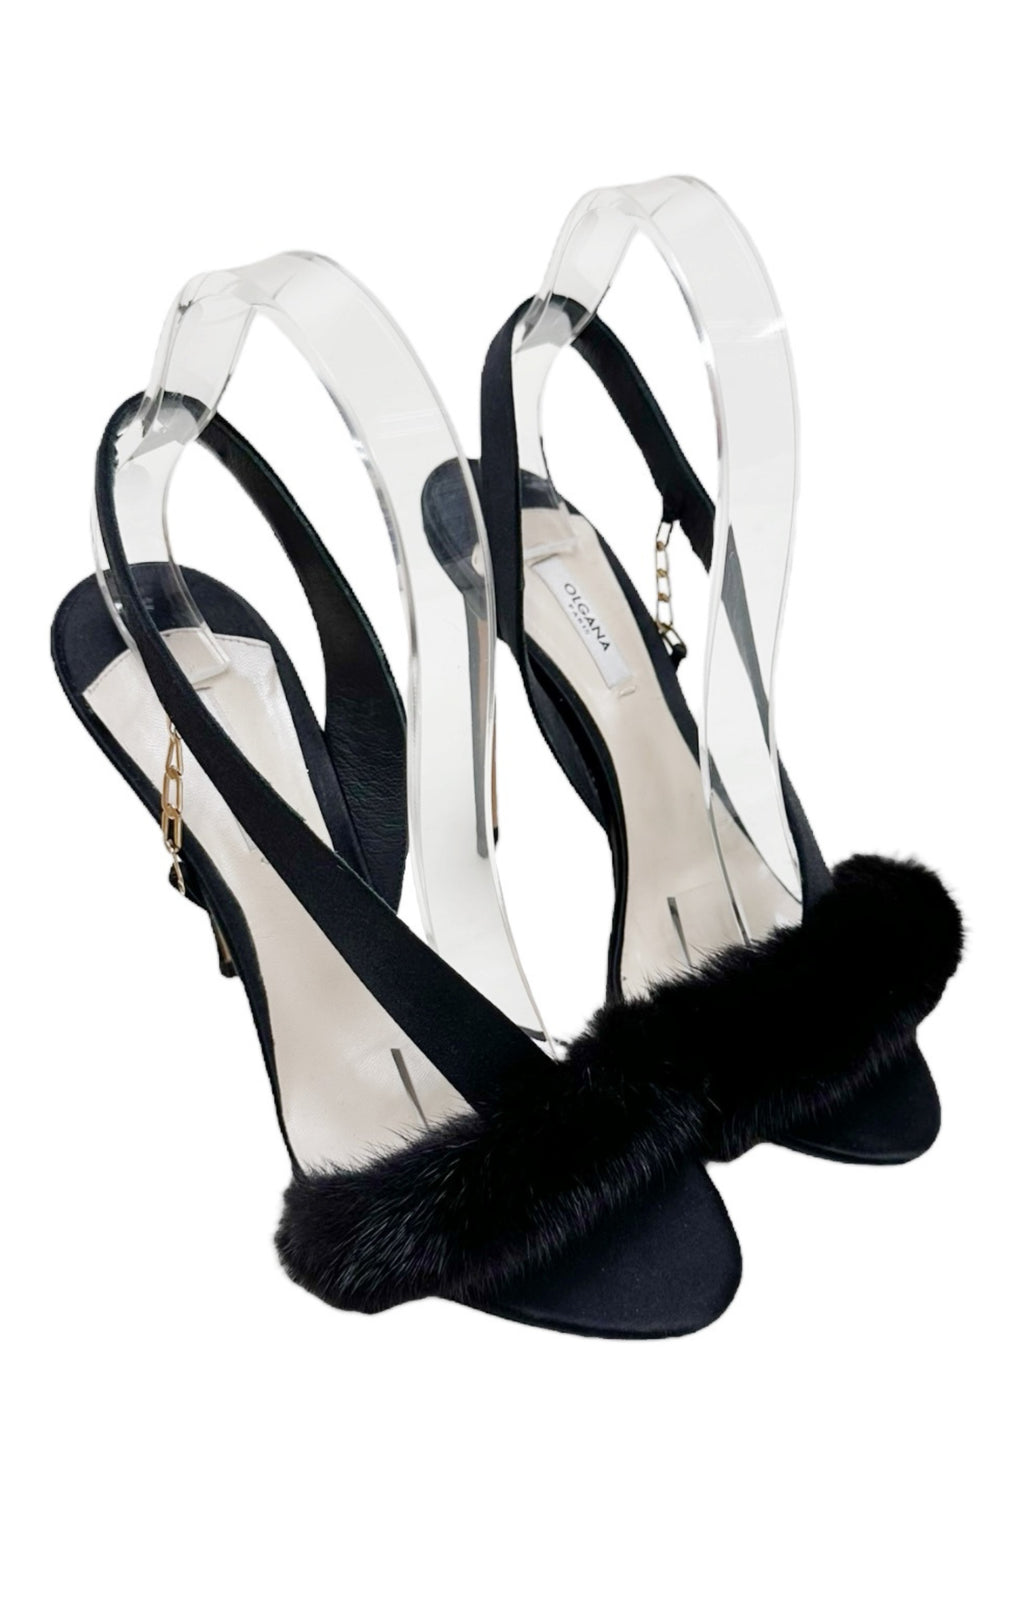 OLGANA Sandals Size: EUR 39 / Fit like US 9